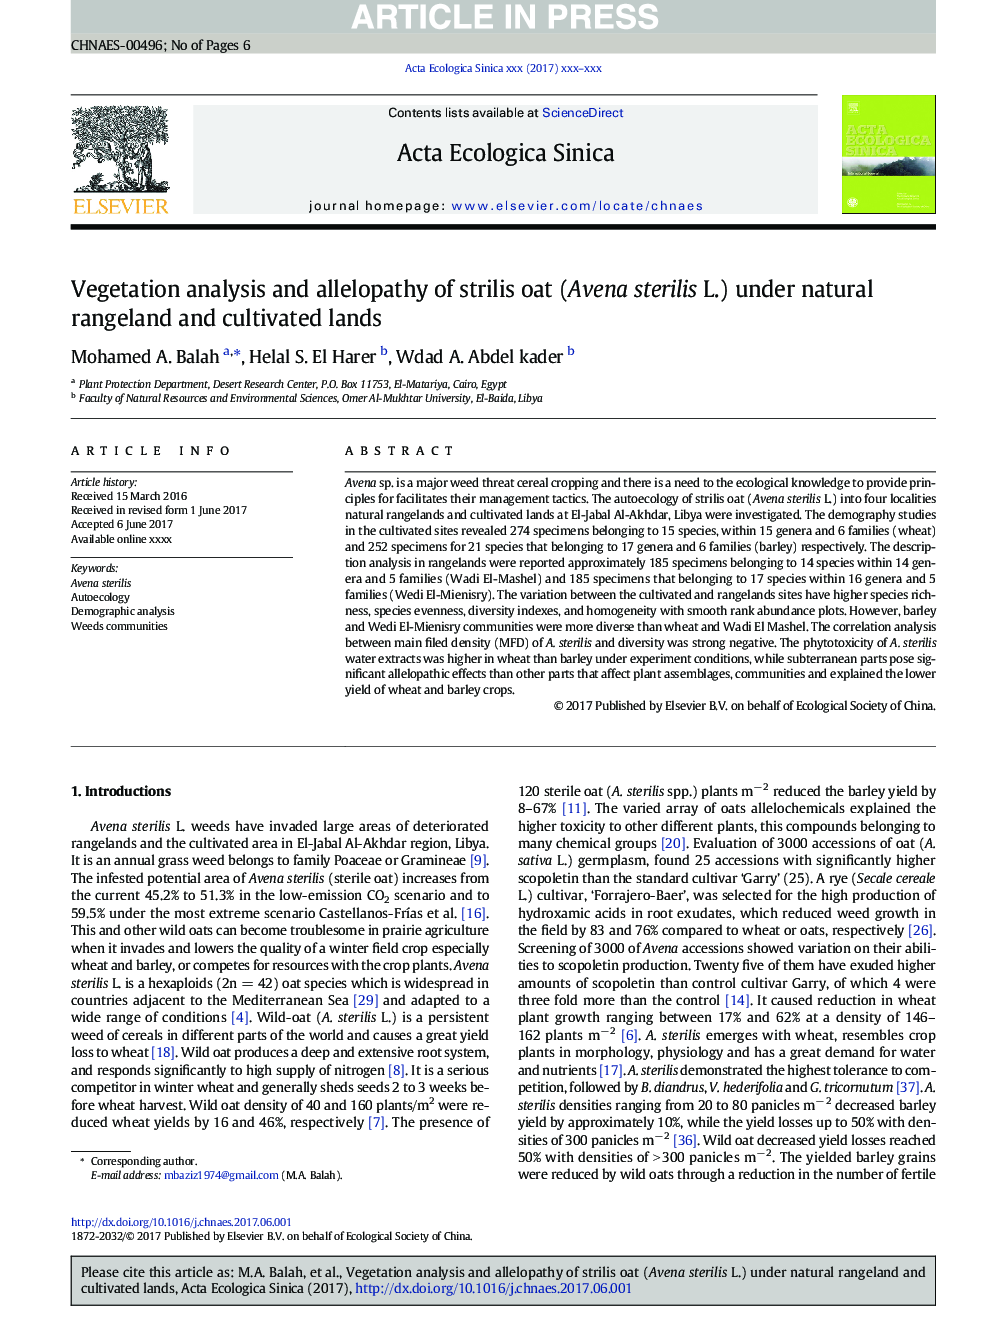 Vegetation analysis and allelopathy of strilis oat (Avena sterilis L.) under natural rangeland and cultivated lands